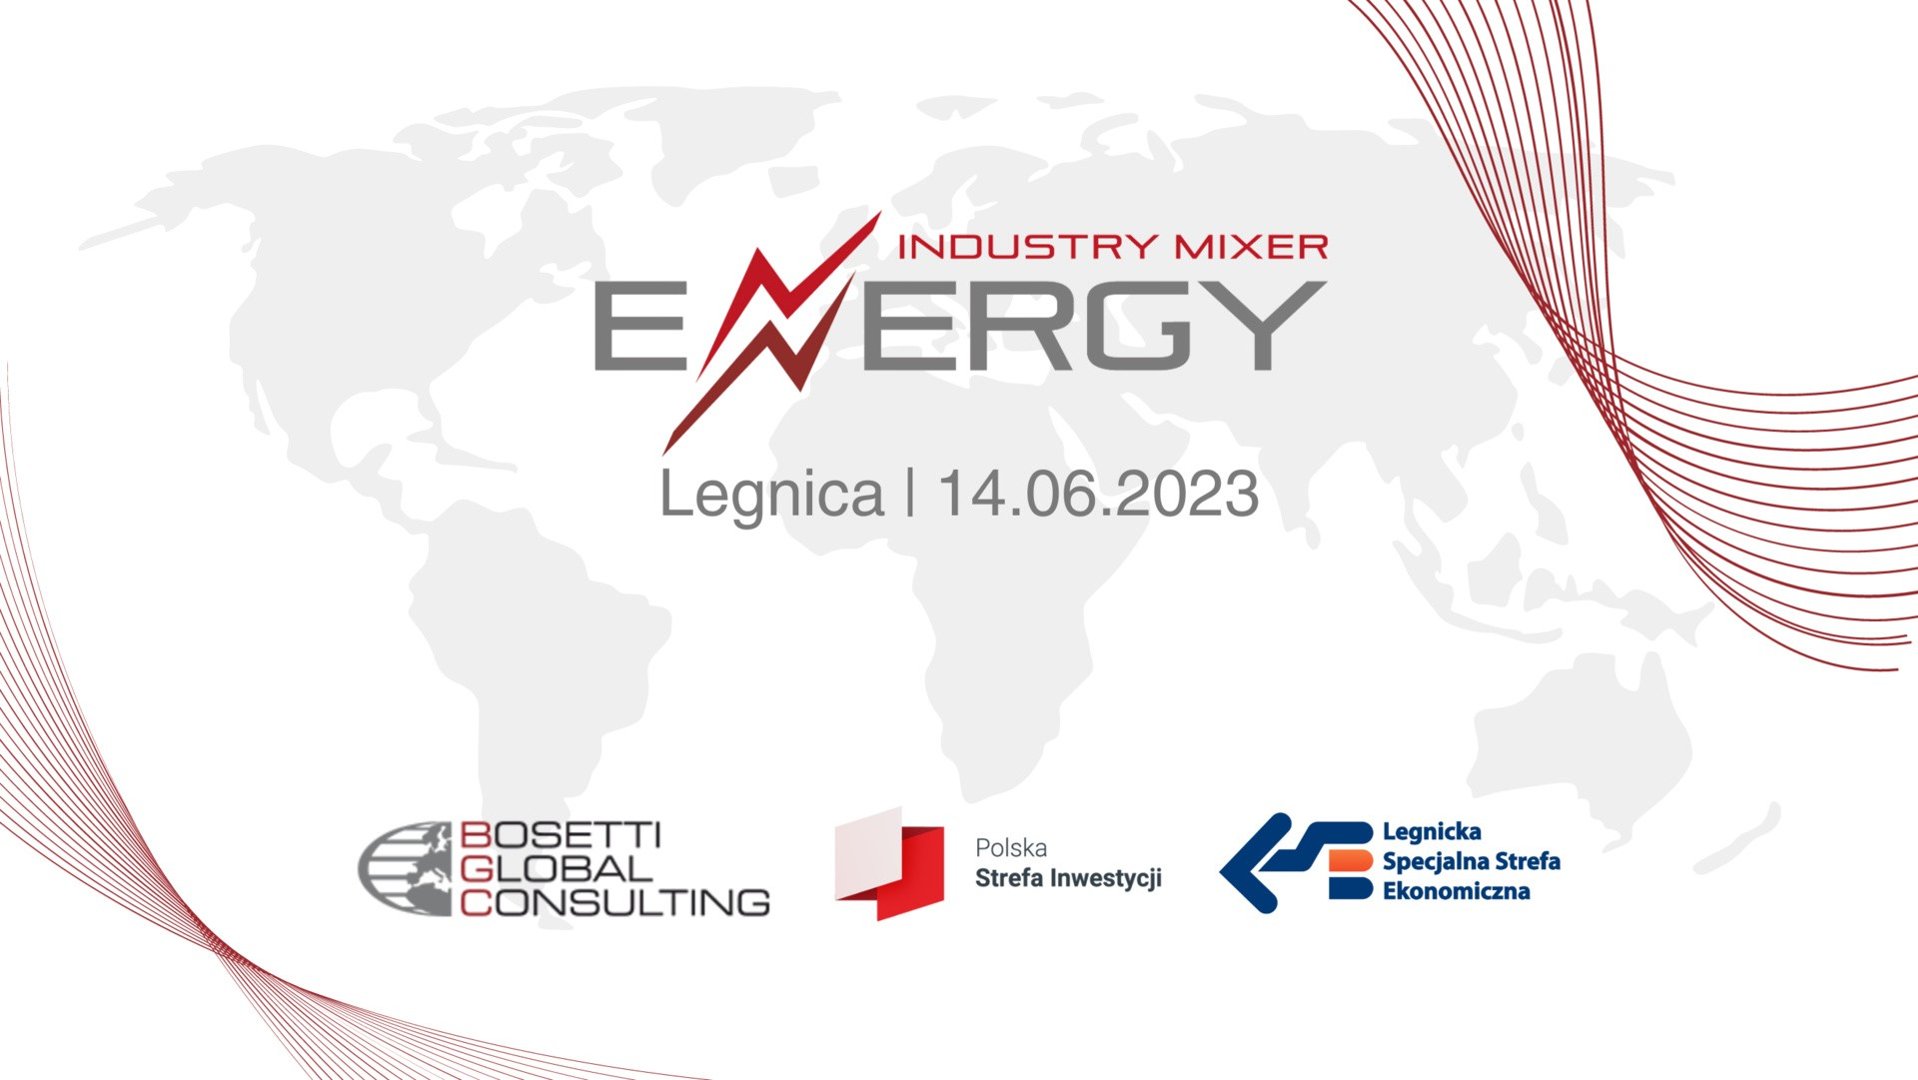 IV edycja Energy Industry Mixer